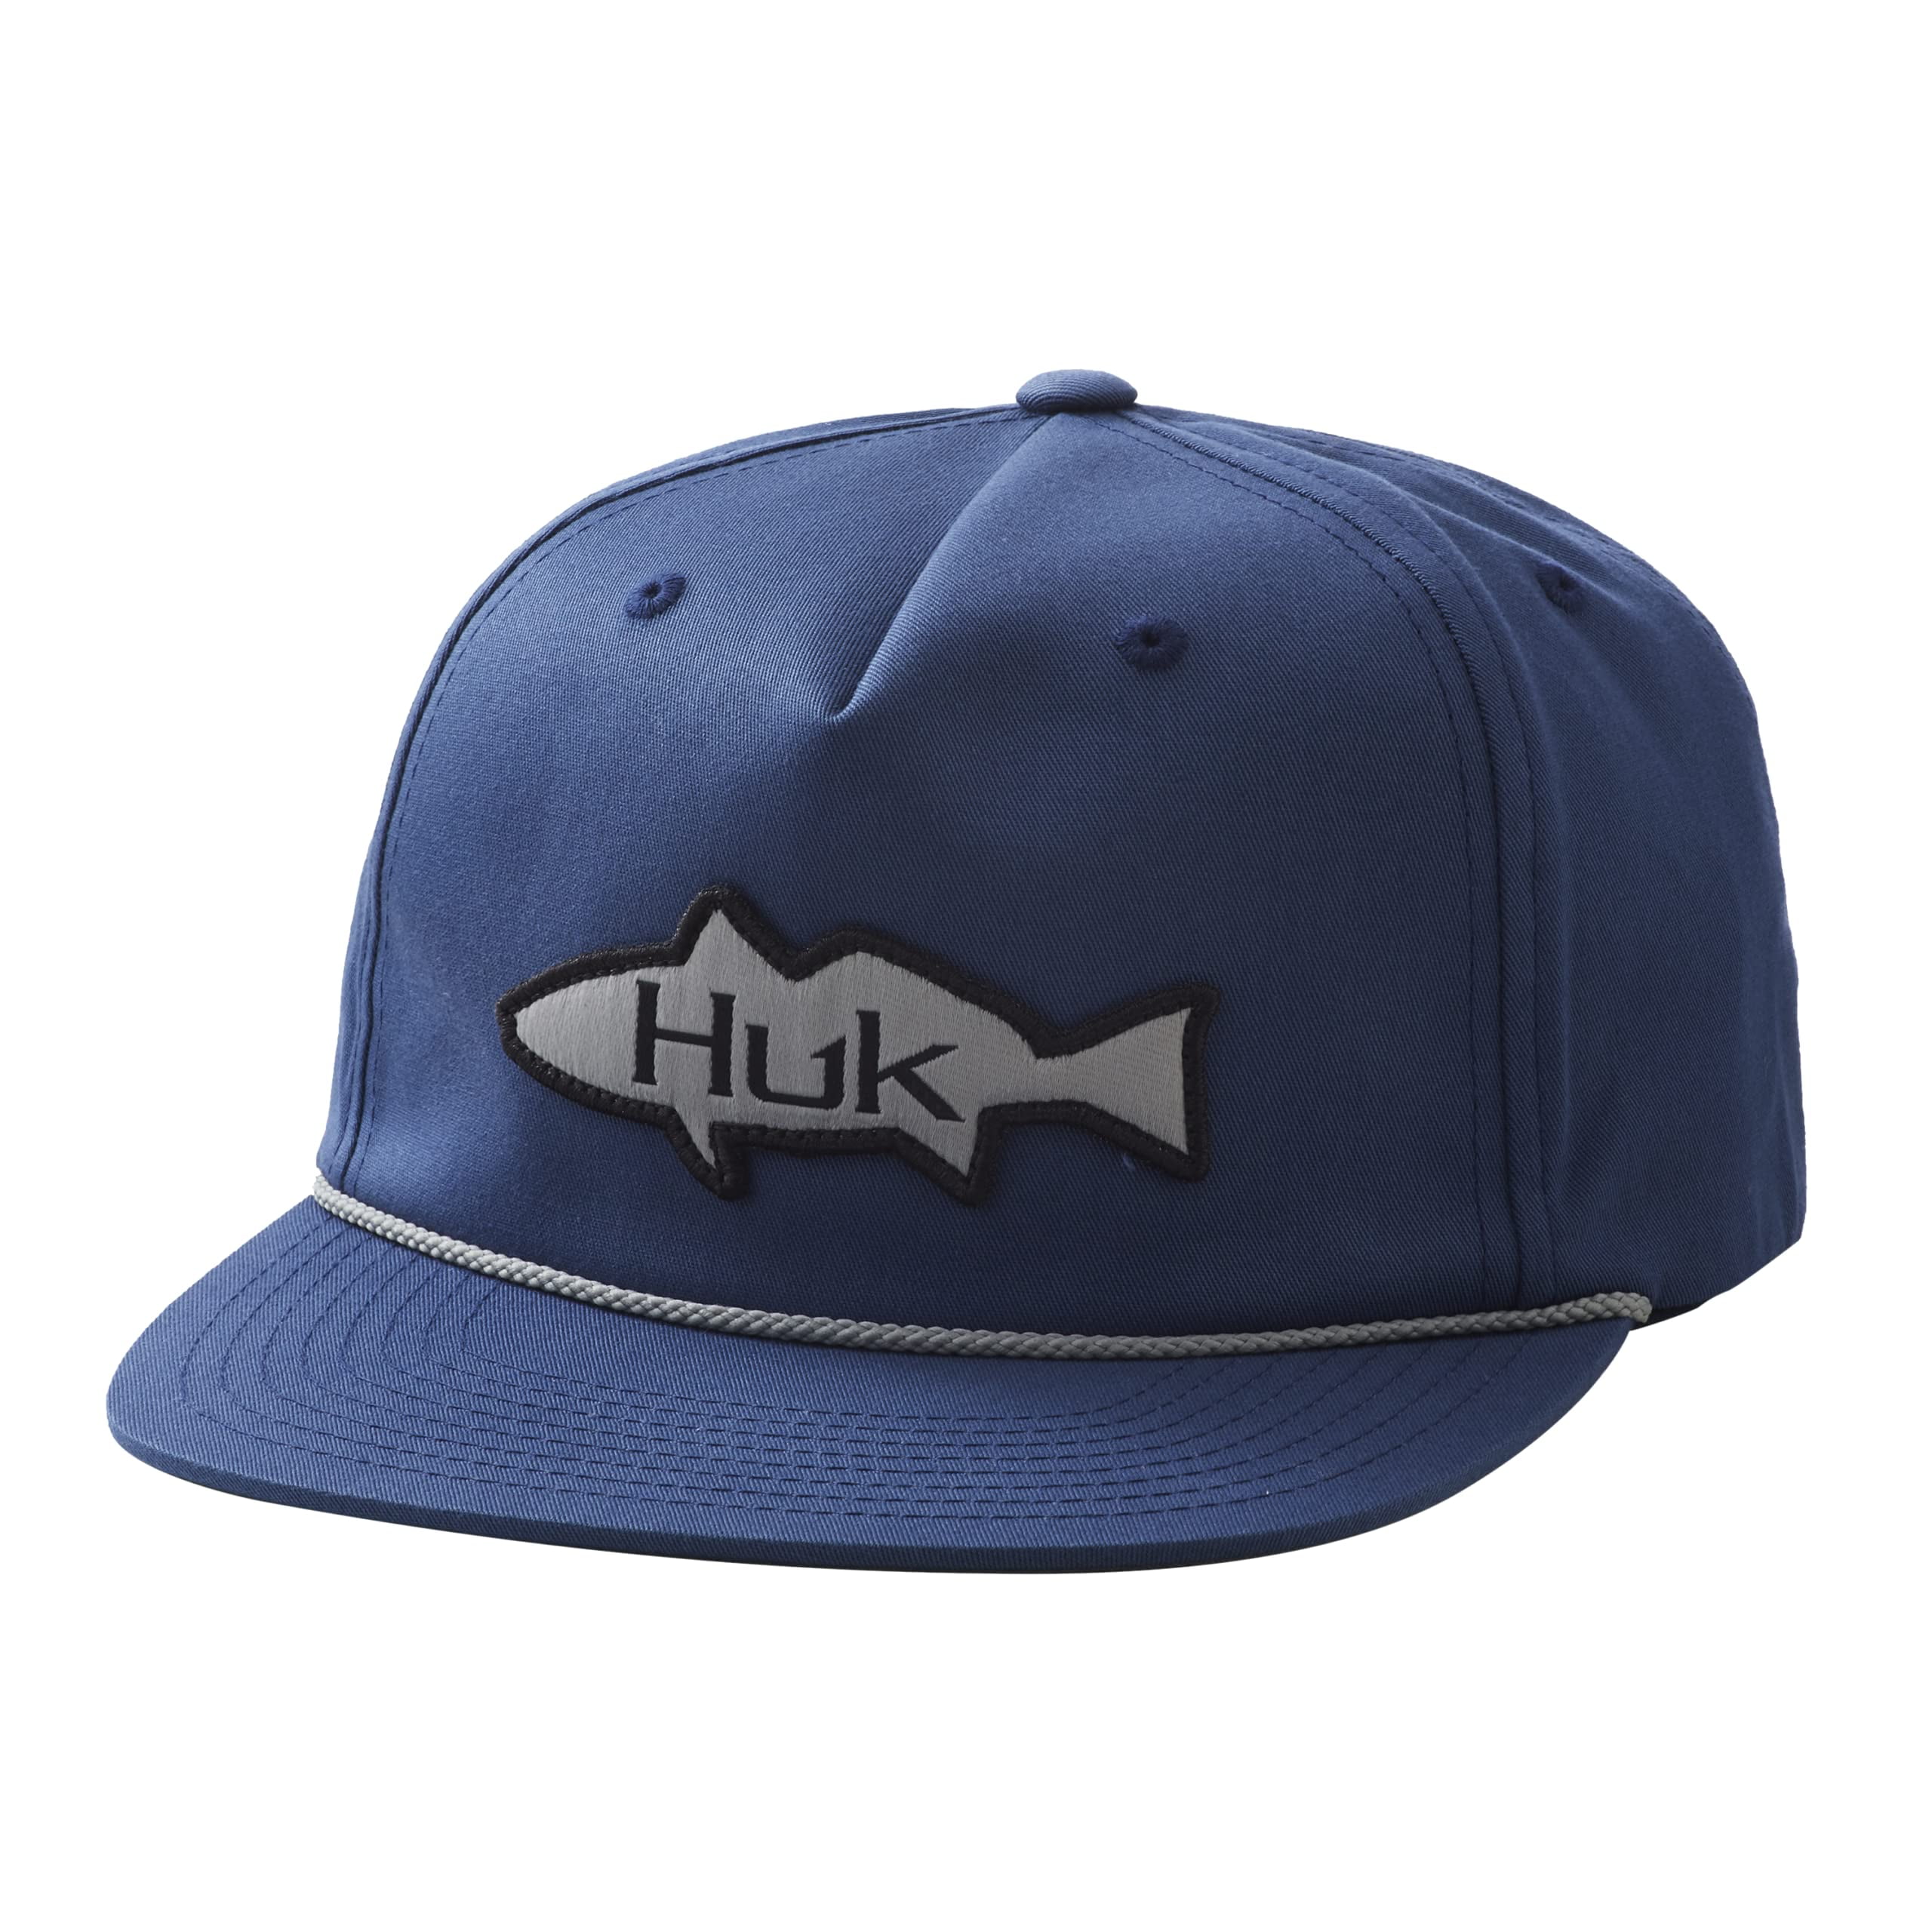 Huk Men's Anti-glare Snapback Trucker Mesh Fishing Hat - Sargasso